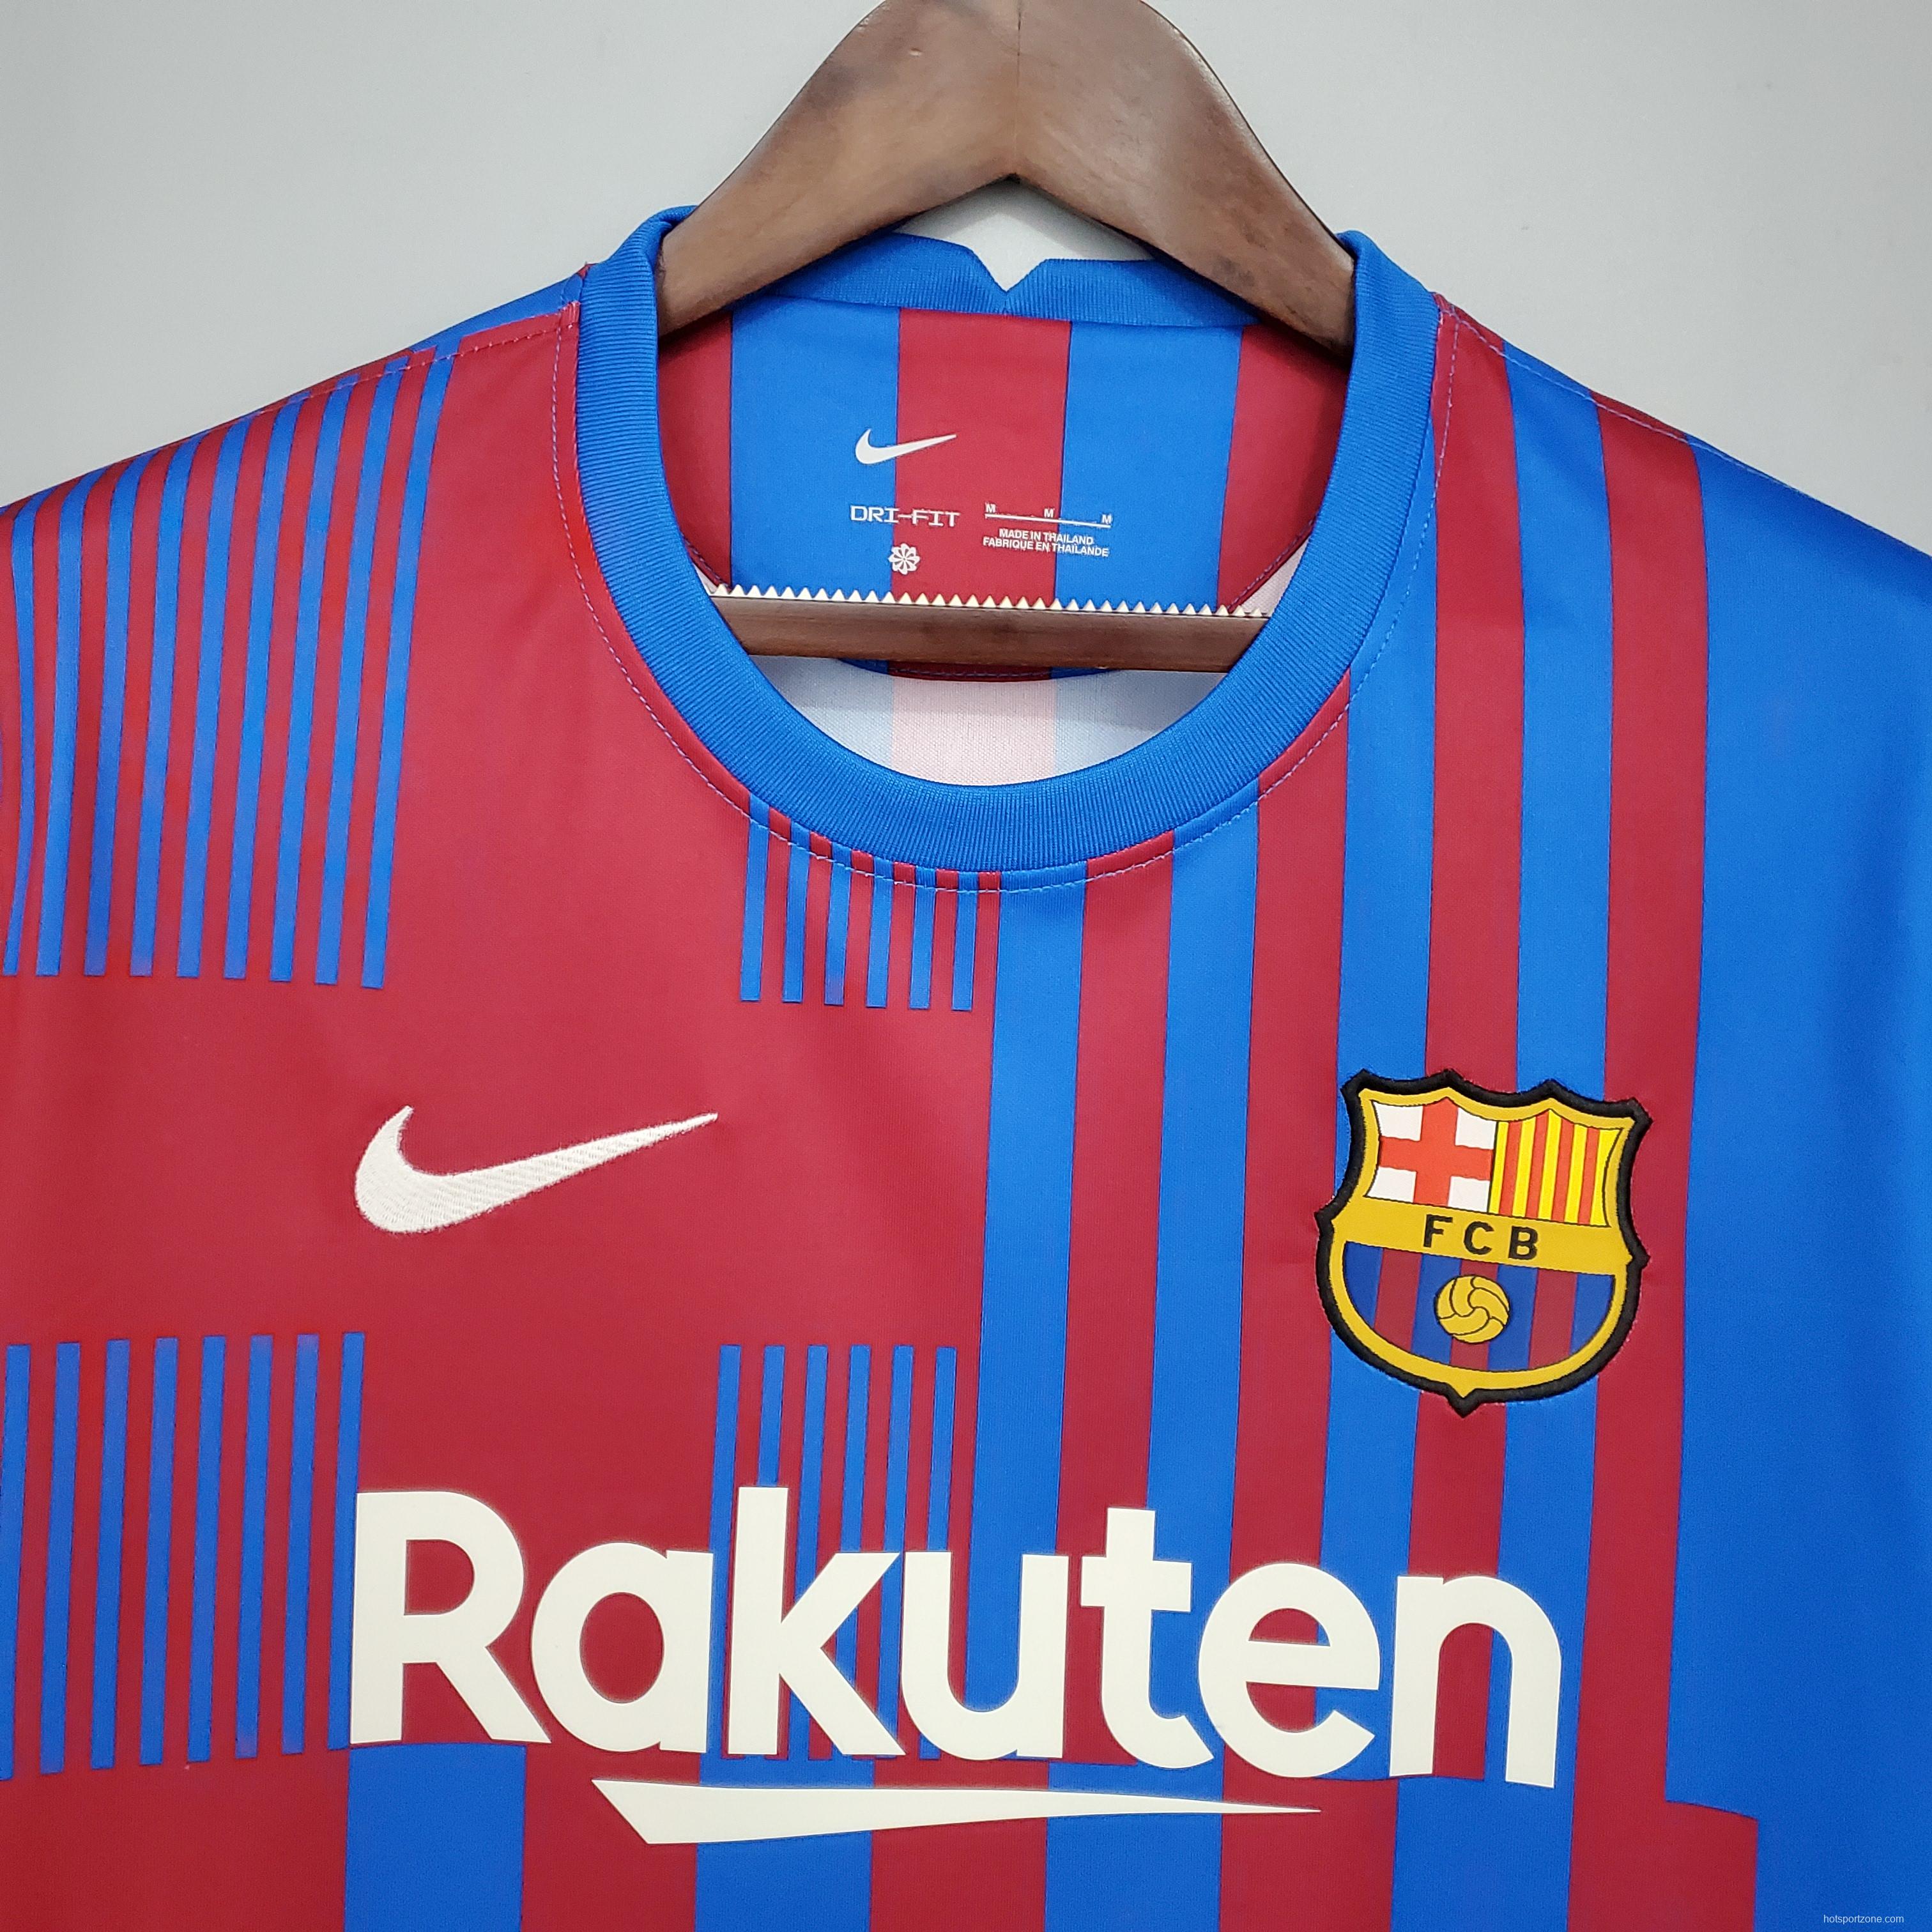 21/22 Barcelona home Soccer Jersey